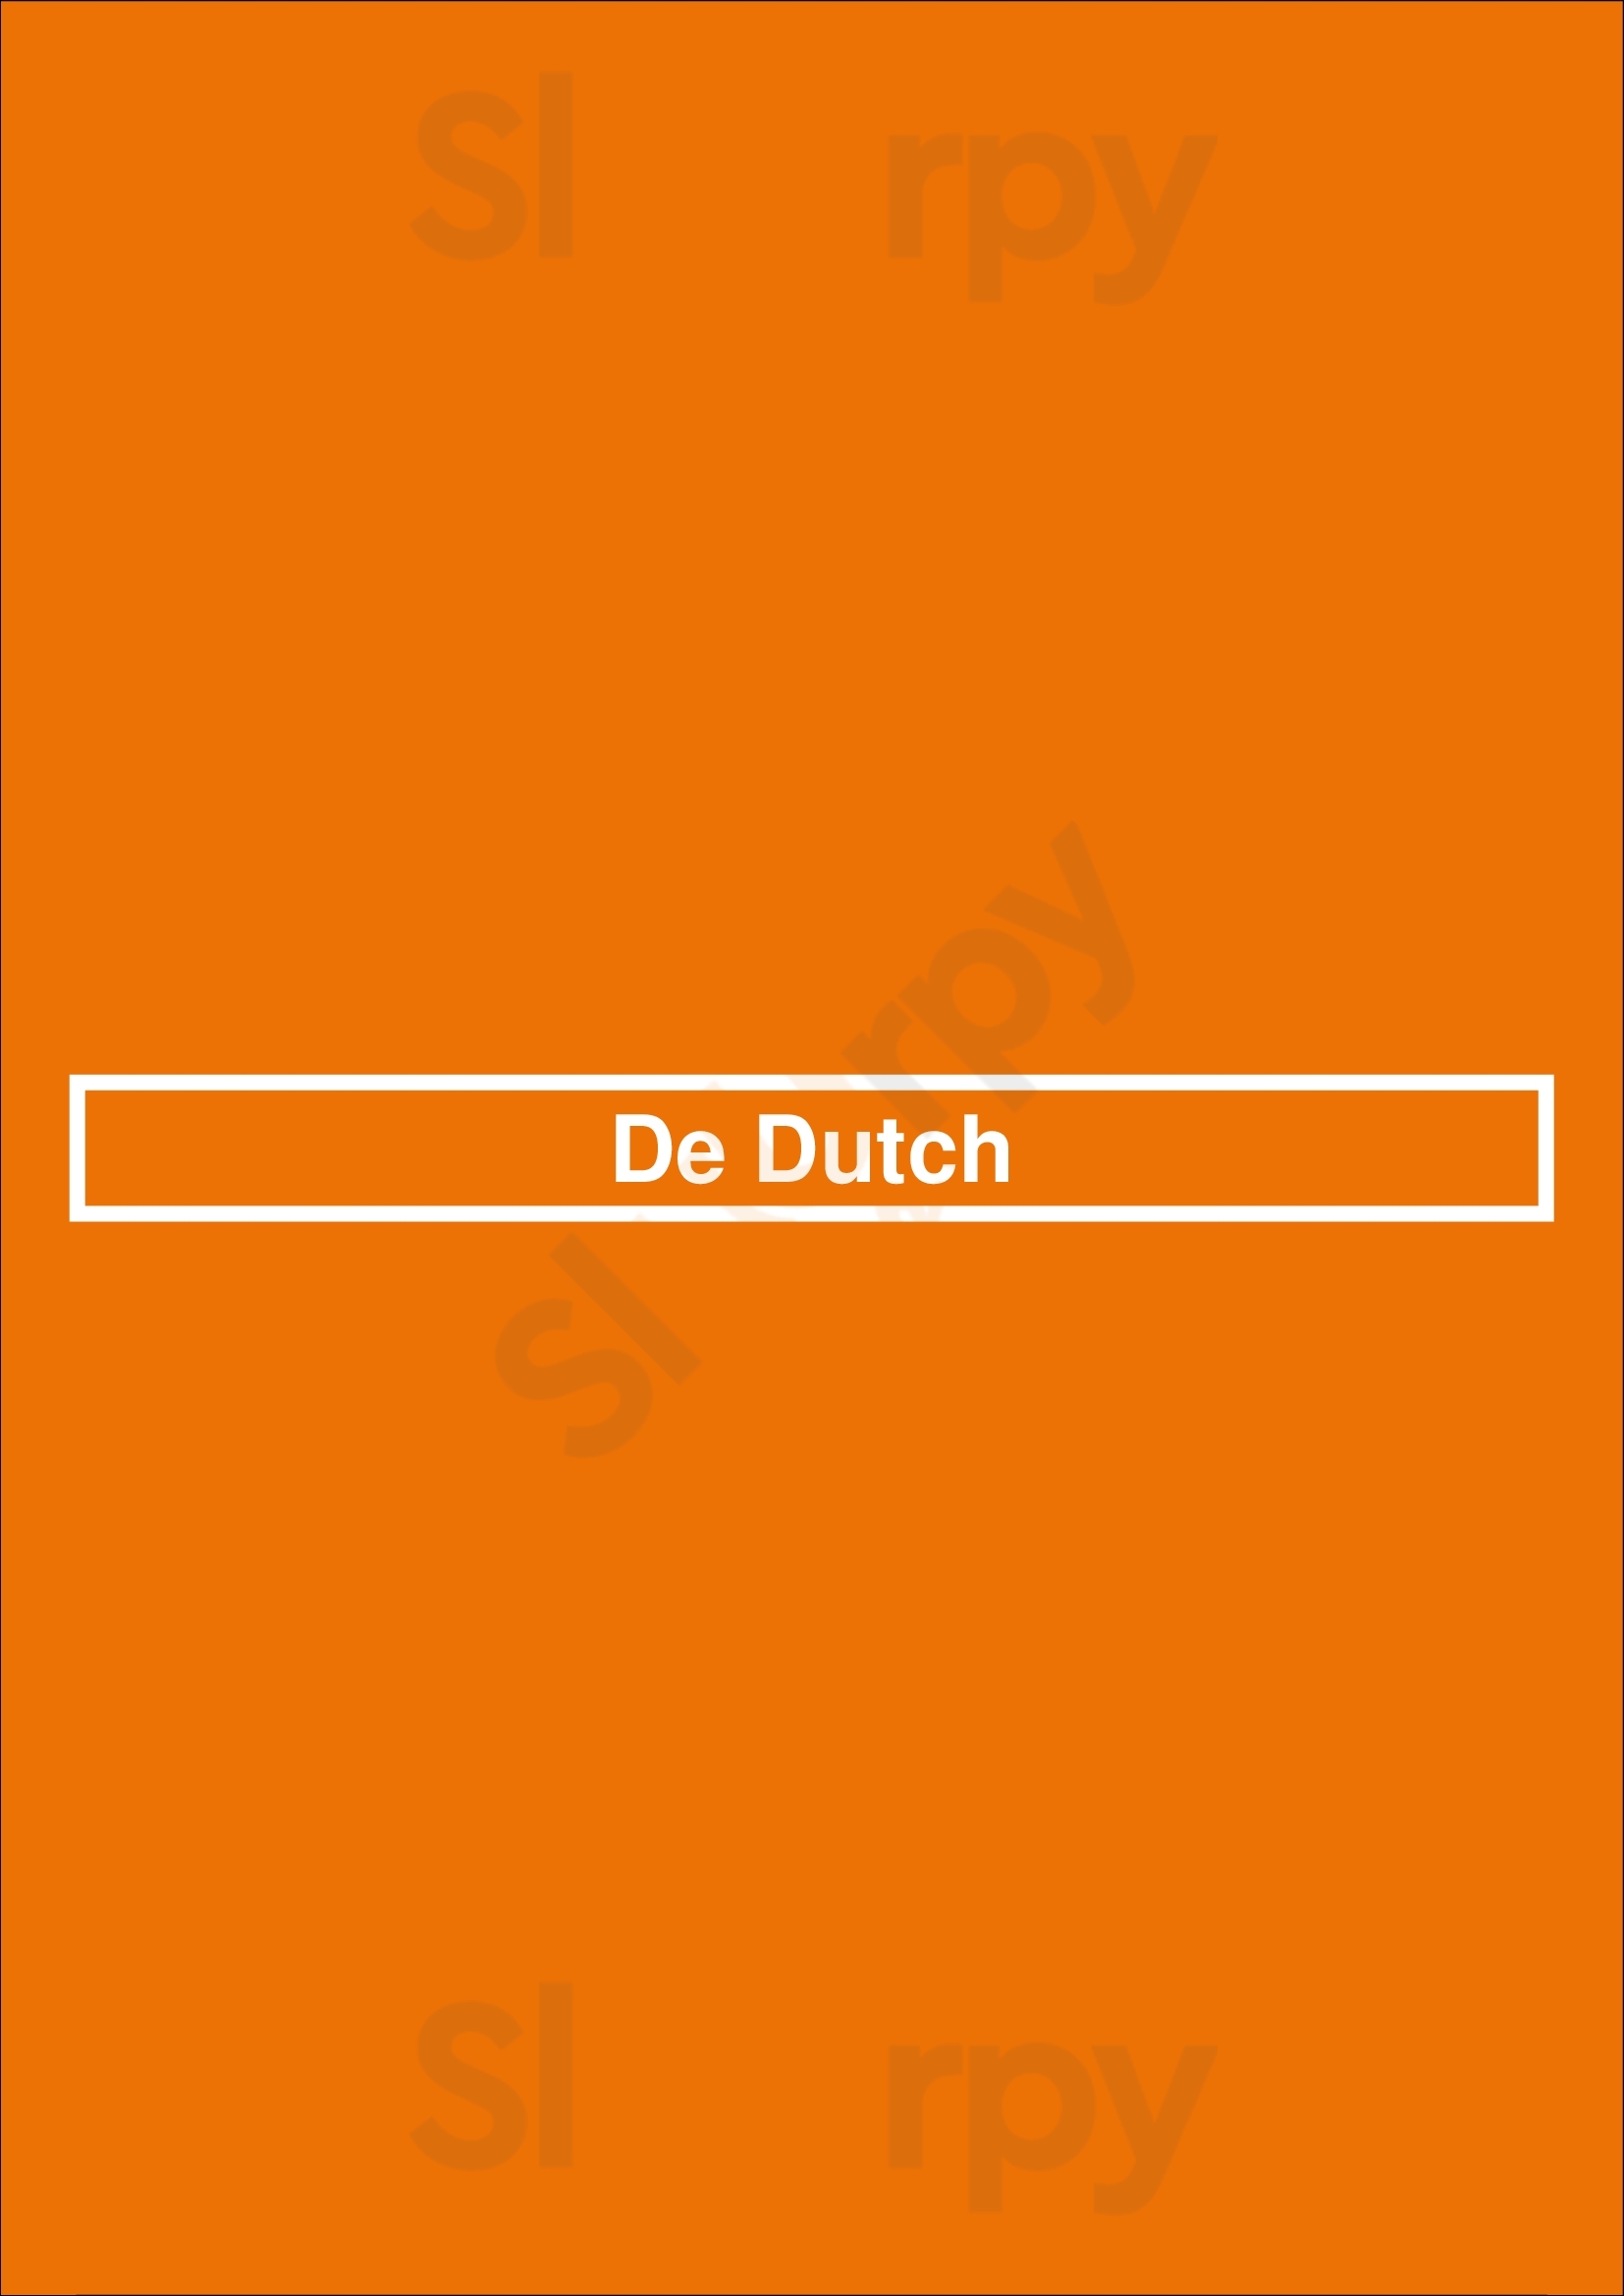 De Dutch Vancouver Menu - 1